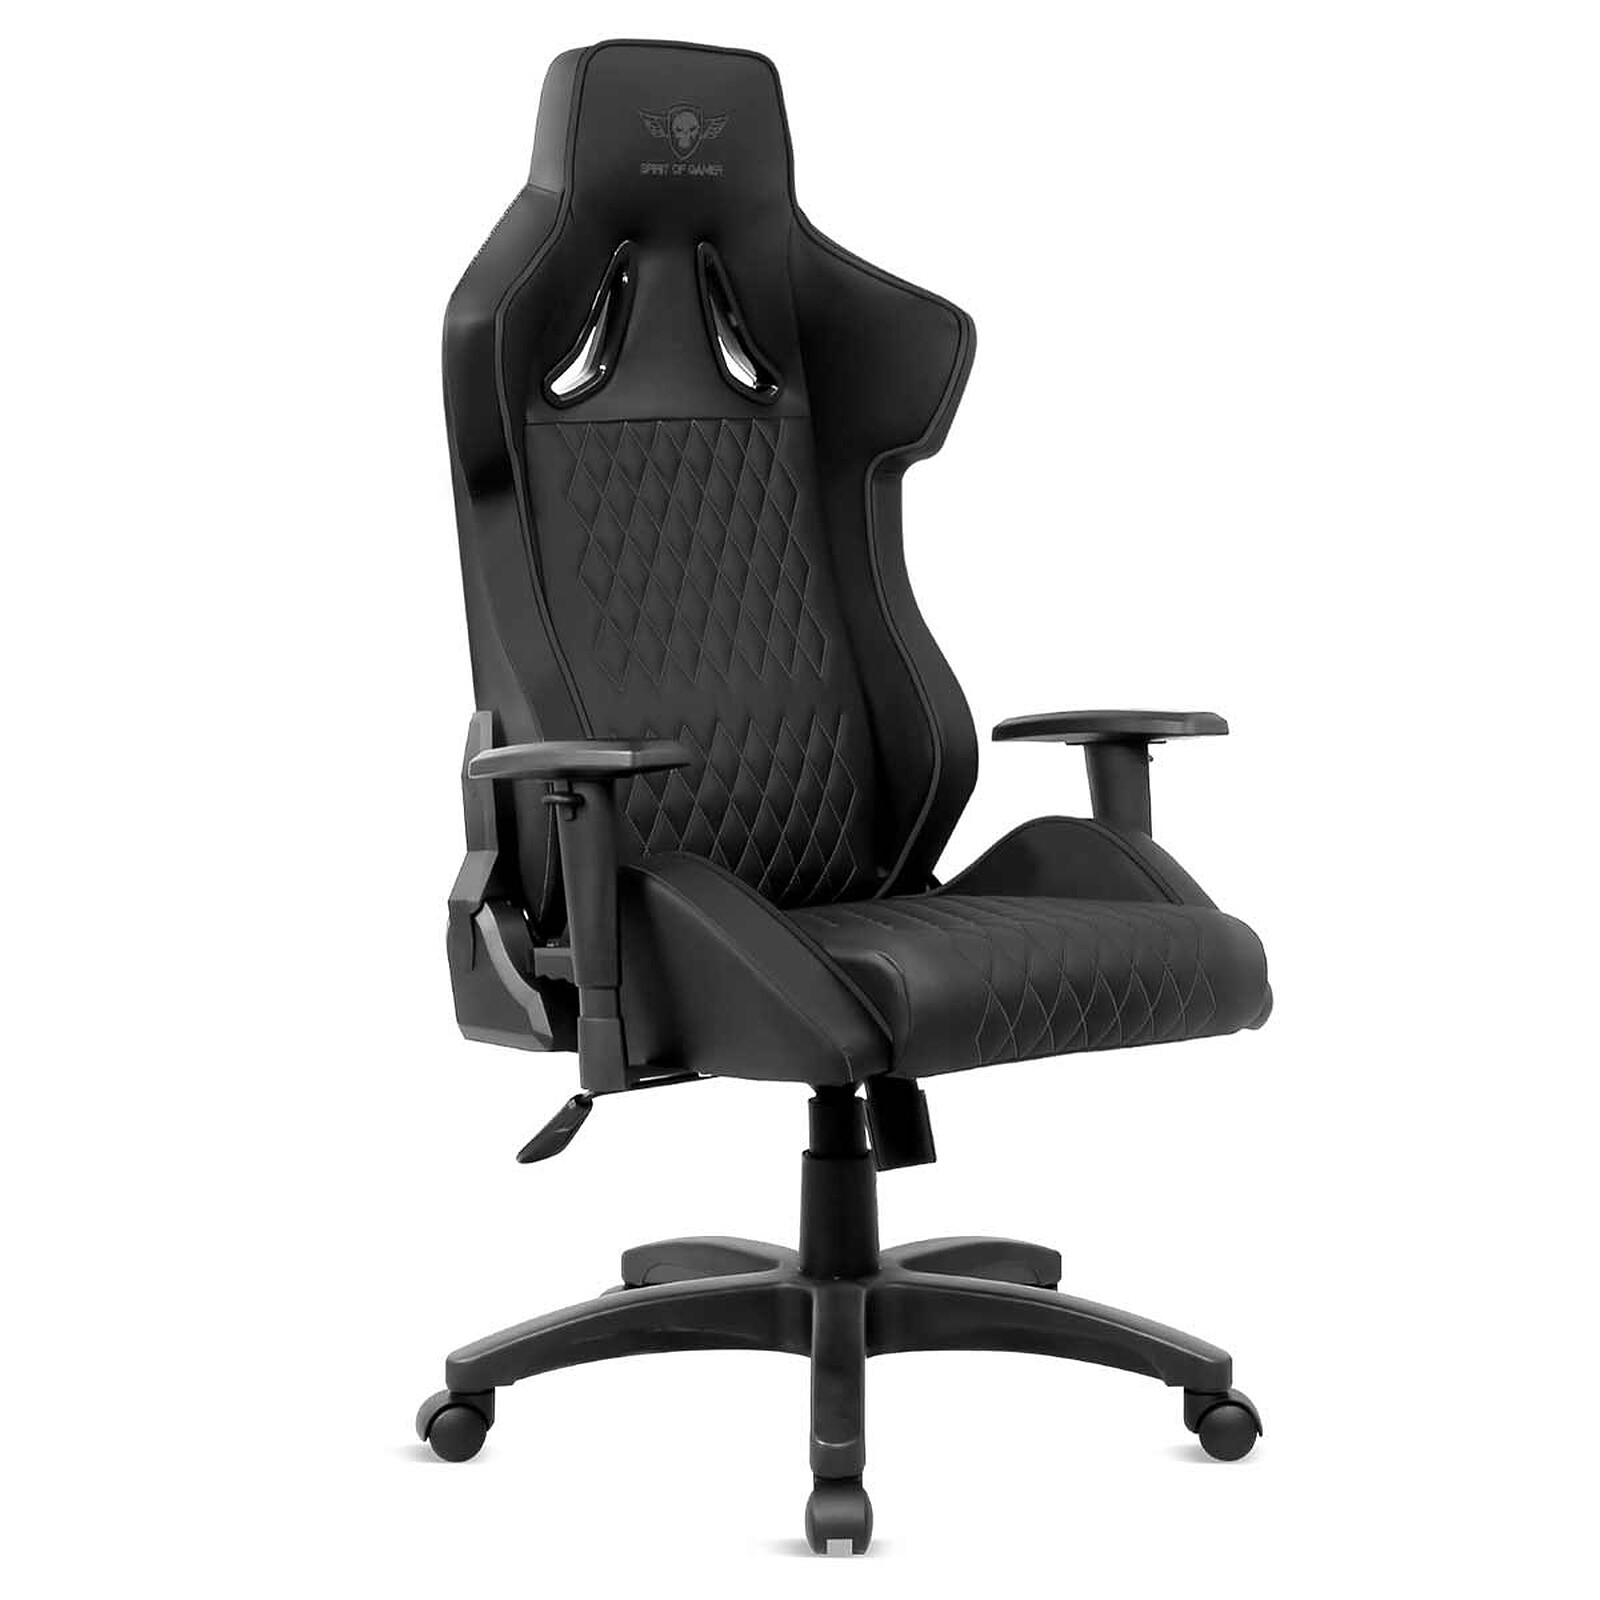 Spirit of Gamer Neon Black - Gaming chair - LDLC 3-year warranty